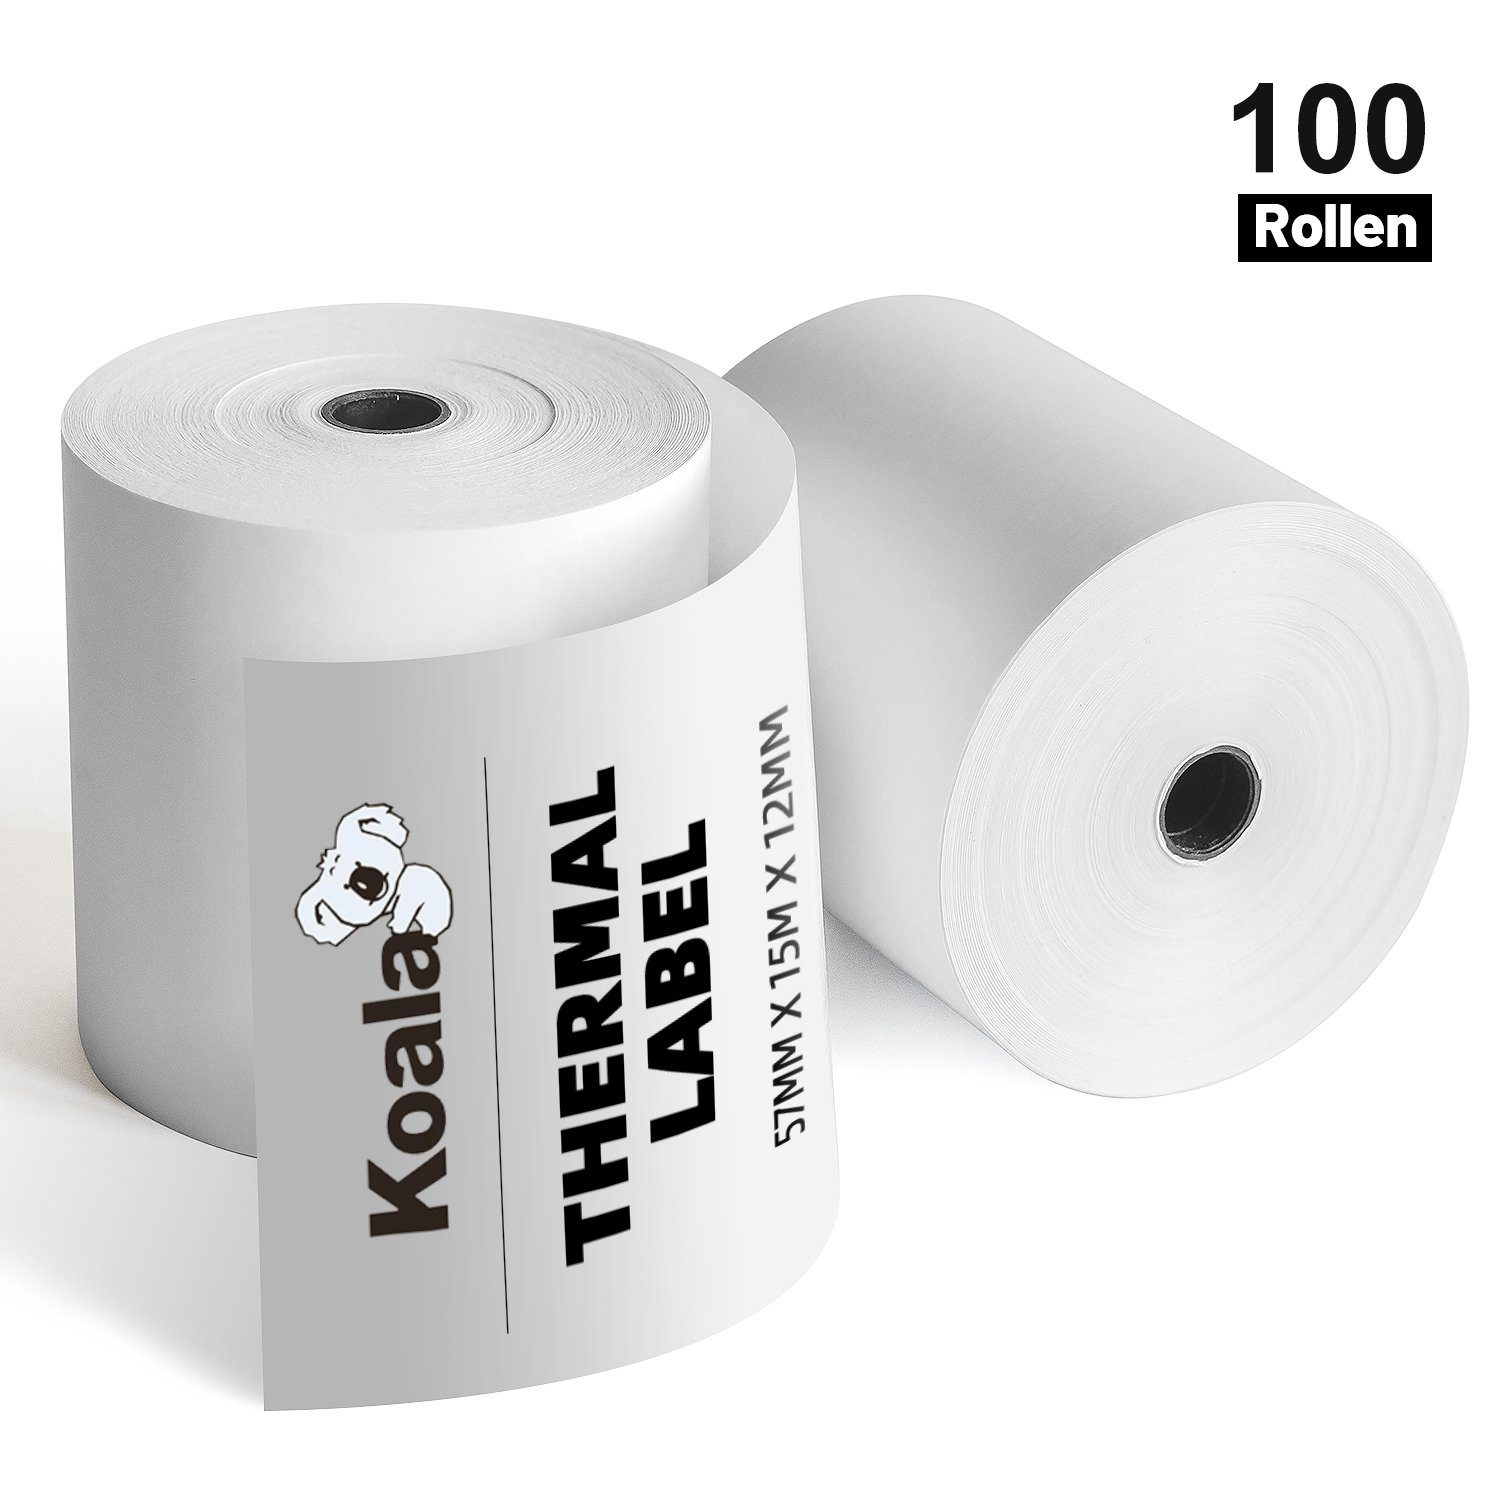 Koala Etikettenpapier 100 Rollen 57 x 15 mm Thermopapier Bonrolle für Kassen, Drucker